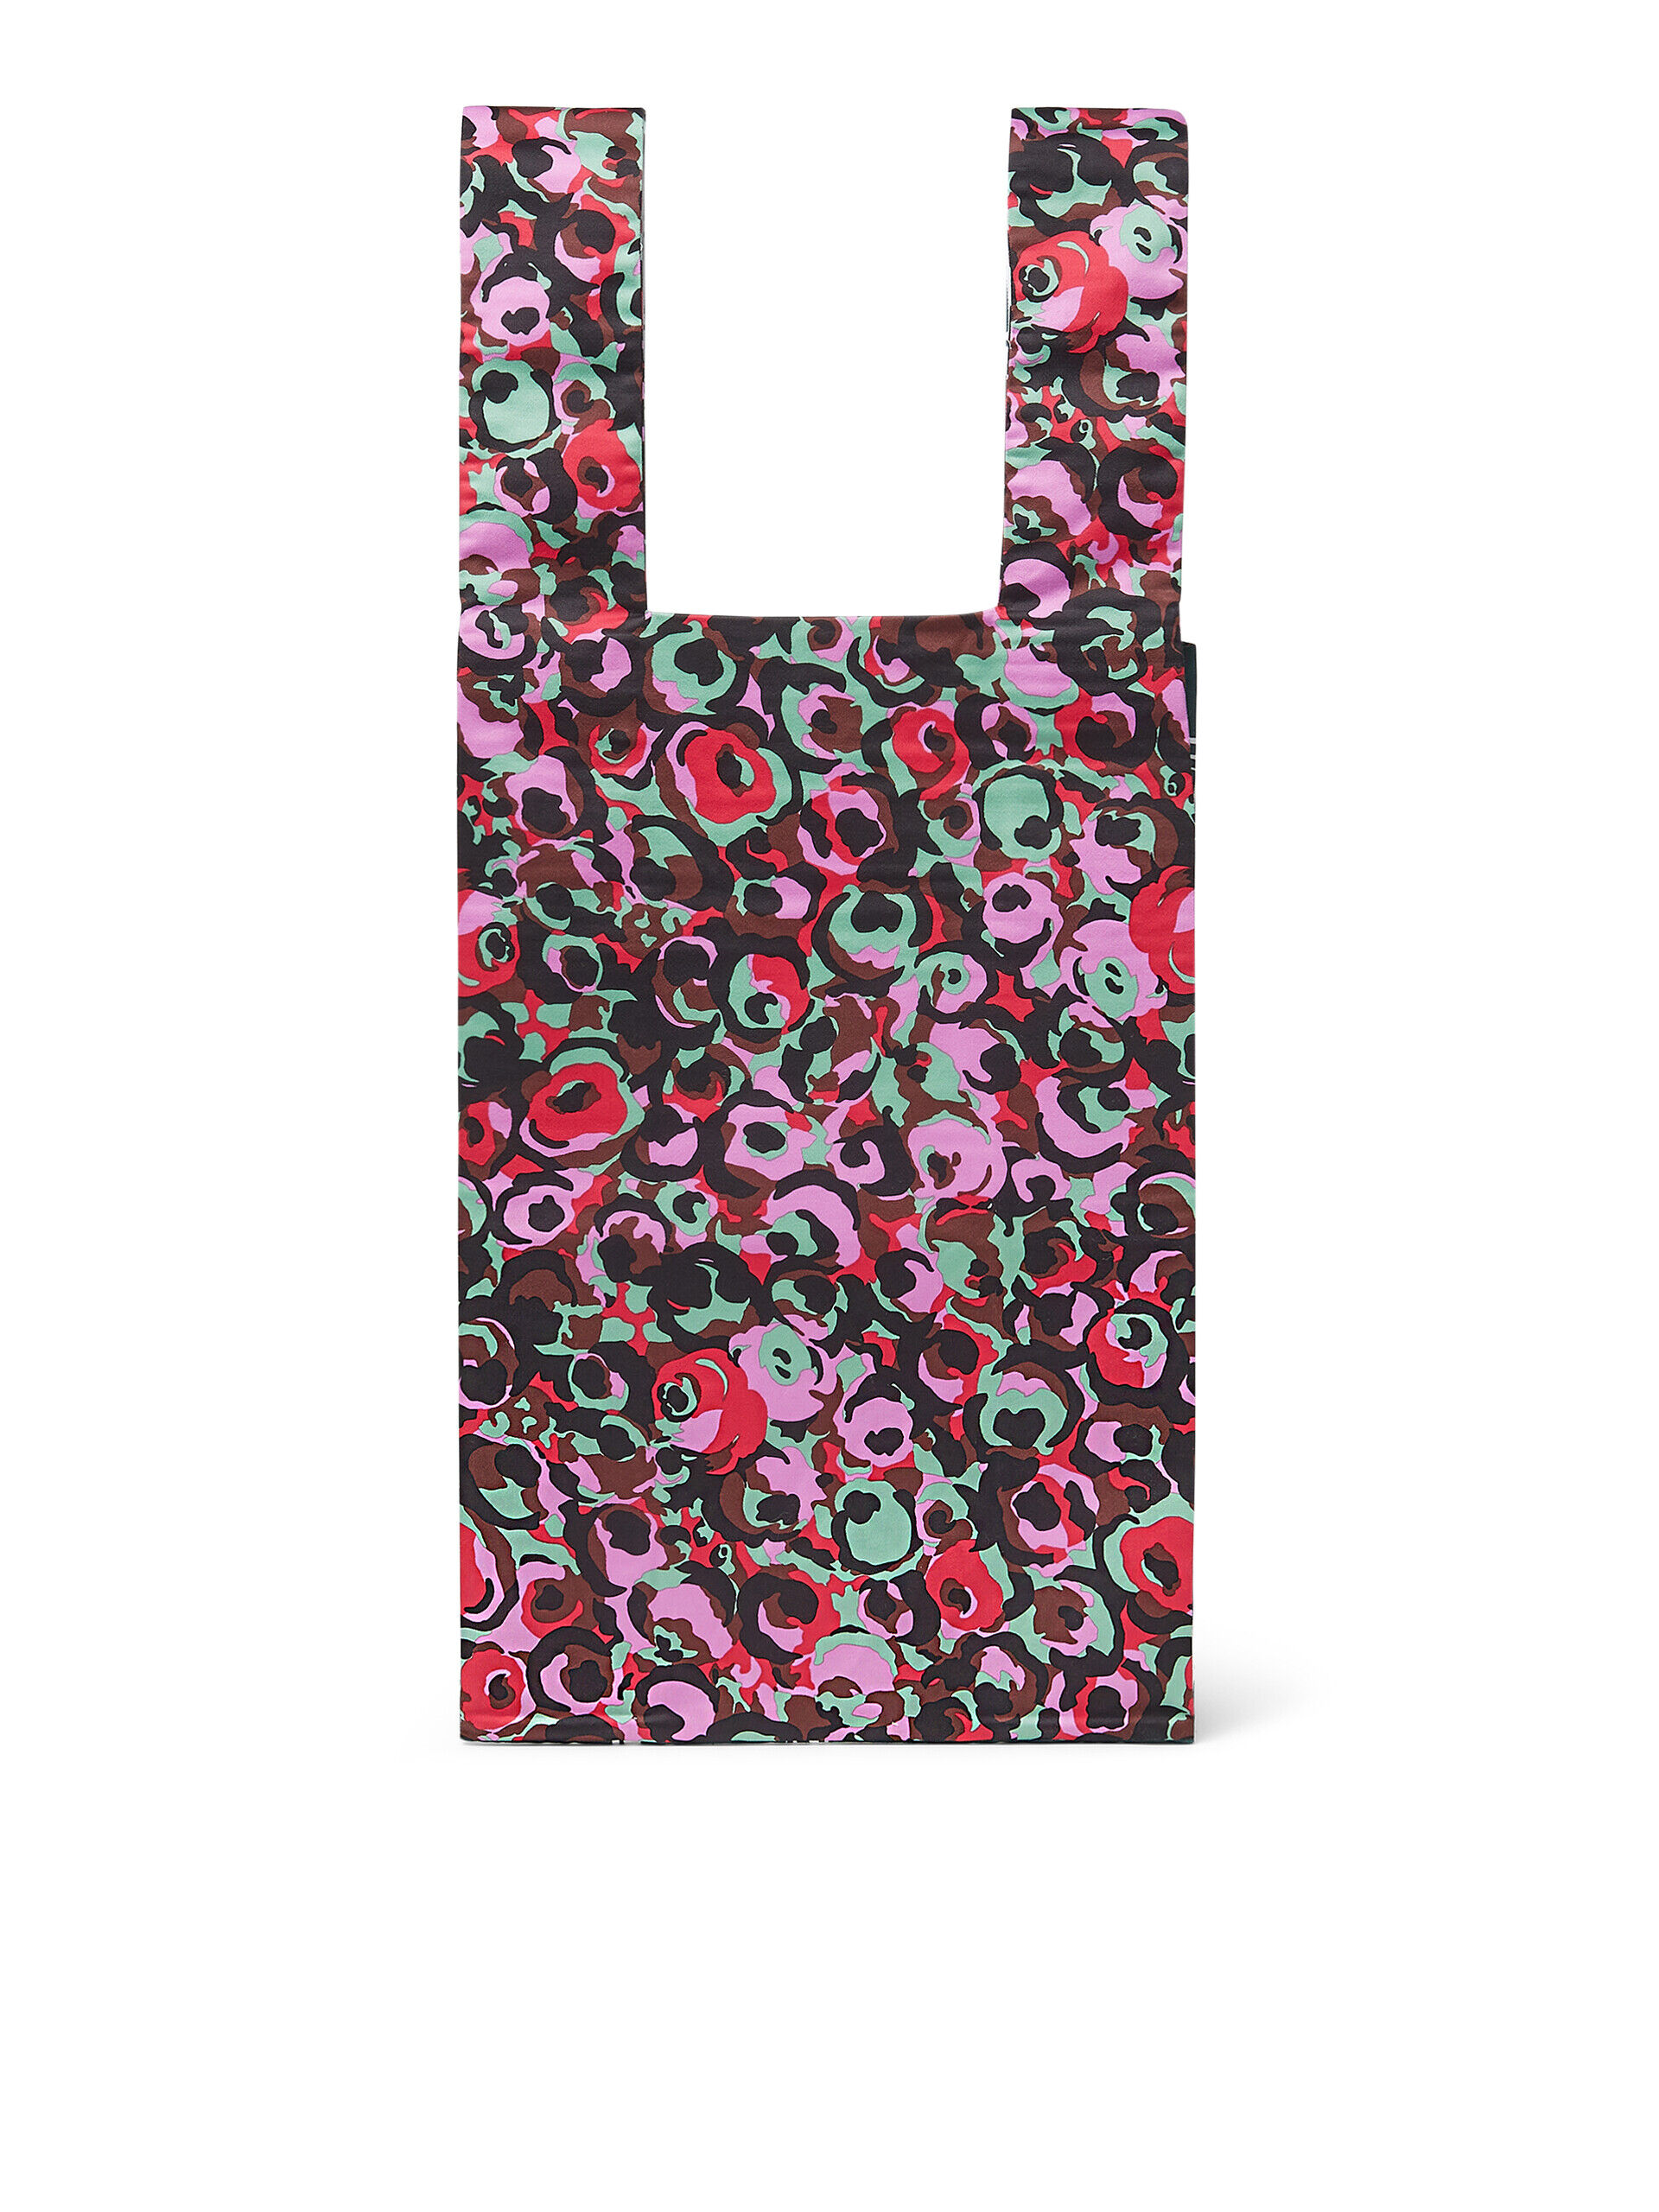 MARNI MARKET cotton shopping bag with check and floral print | Marni